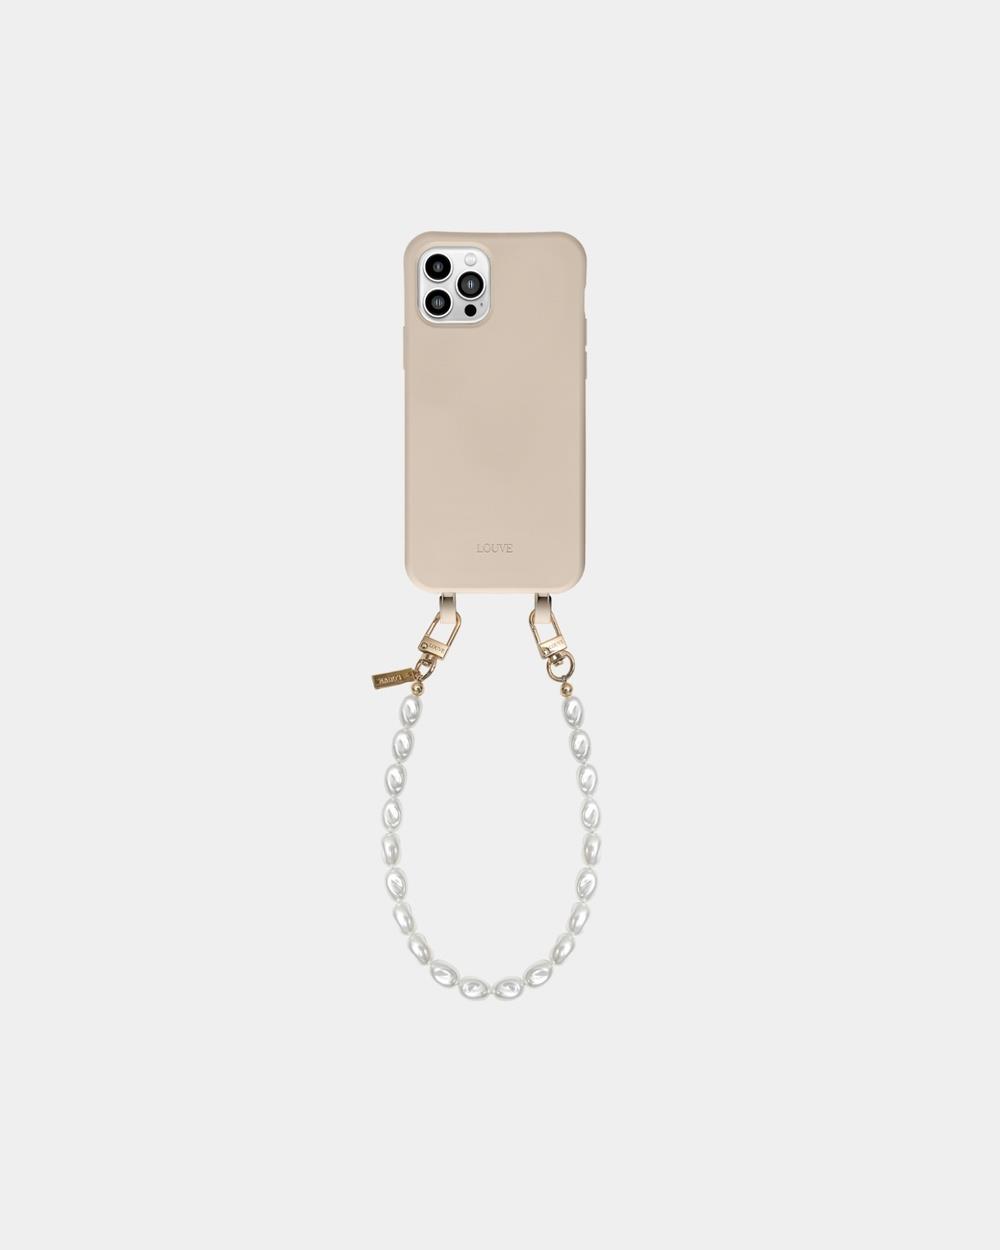 LOUVE COLLECTION - Desert Sand Phone Case + Pearl Wristlet - Novelty Gifts (Beige/Pearl) Desert Sand Phone Case + Pearl Wristlet